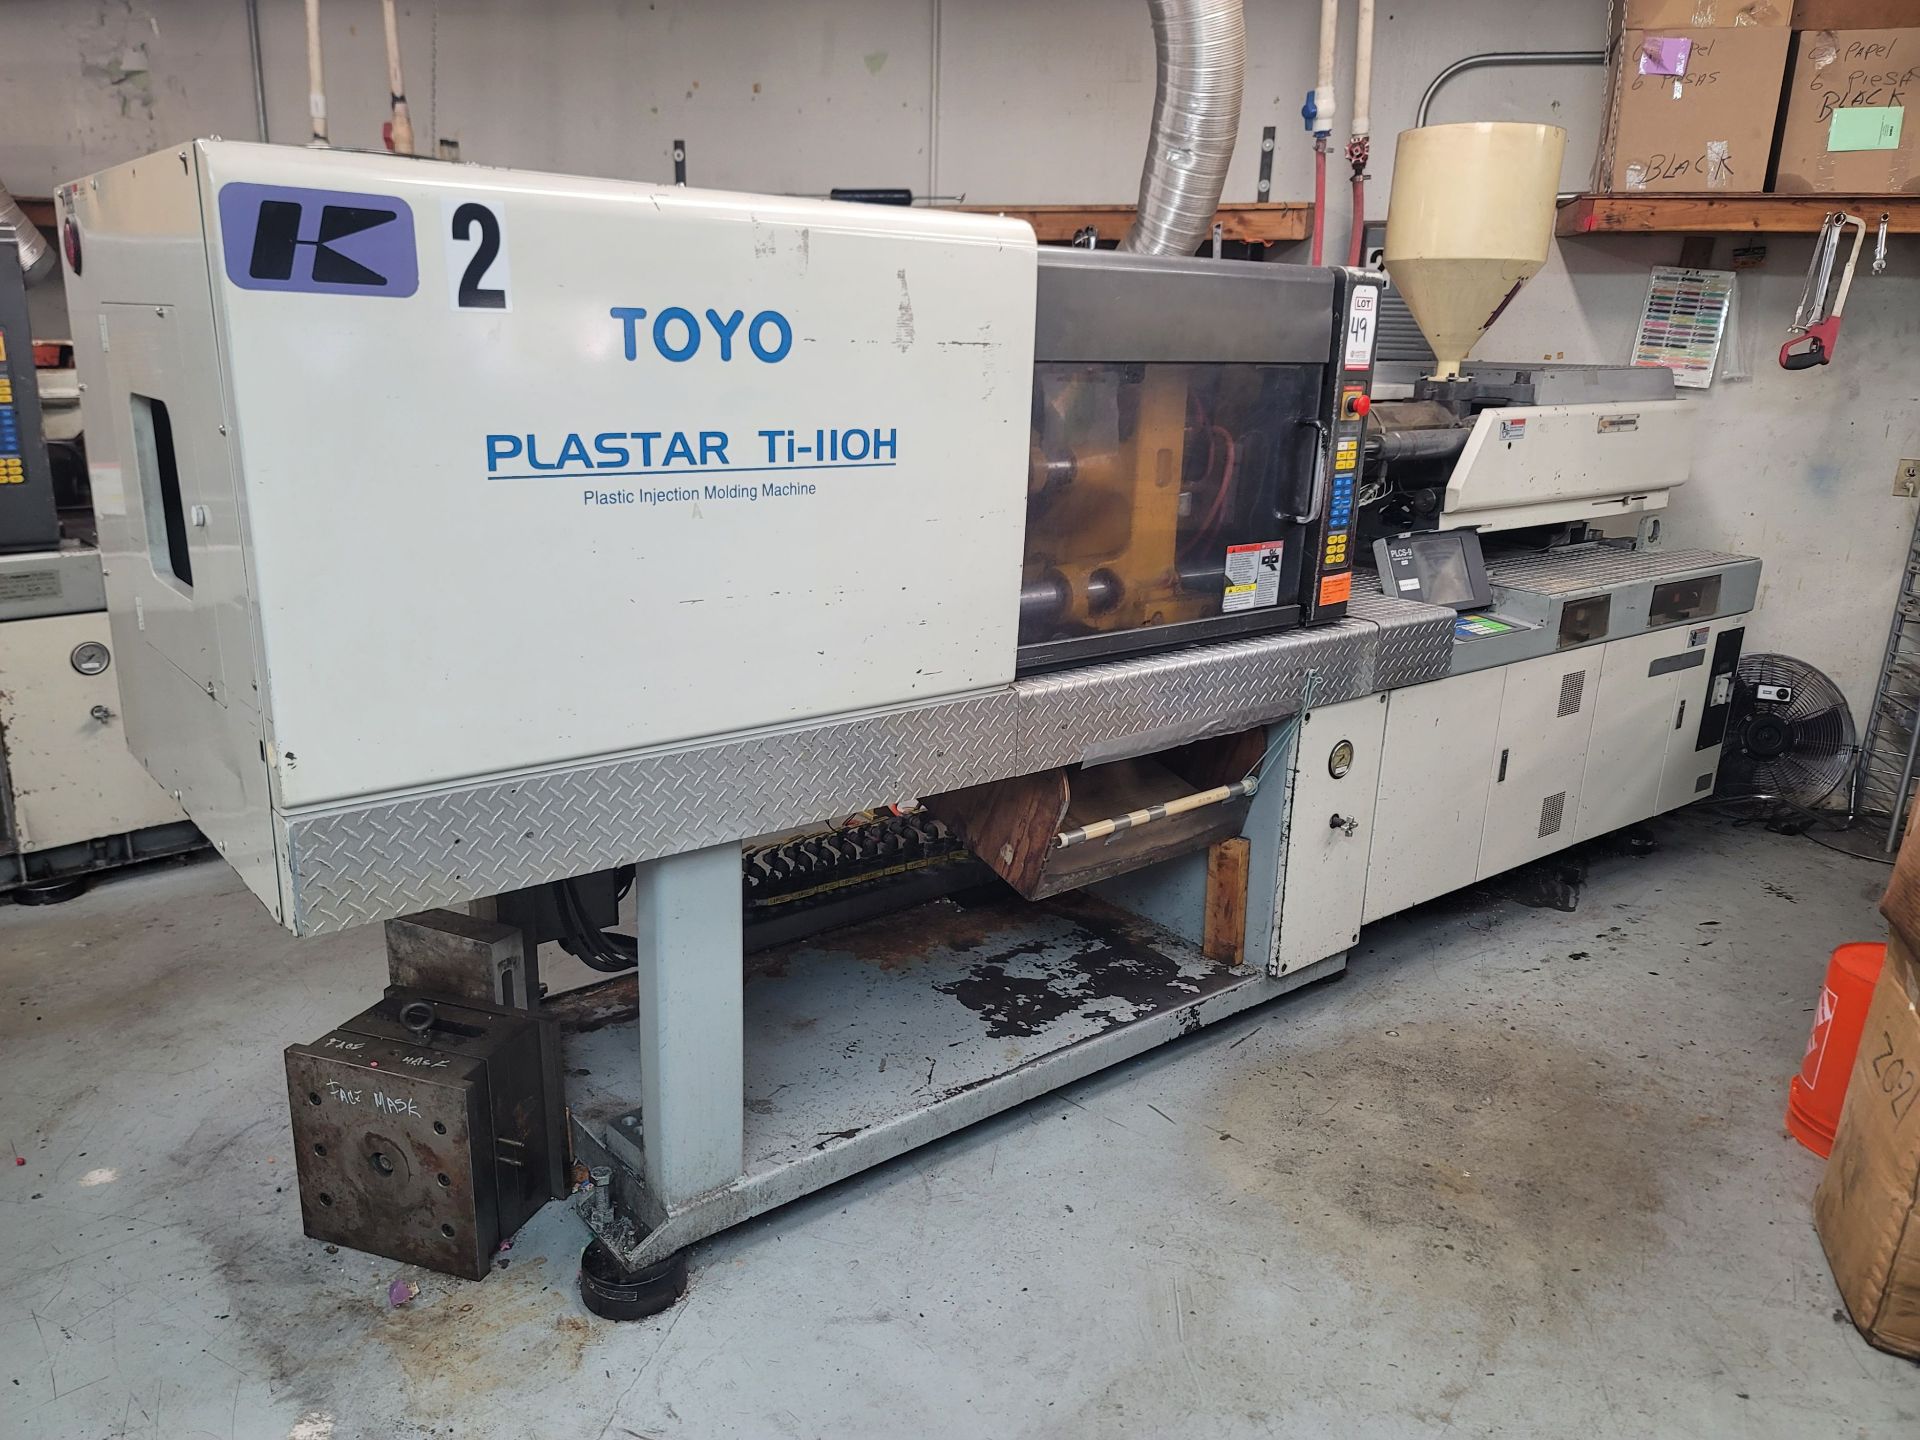 TOYO PLASTAR Ti-110H PLASTIC INJECTION MOLDING MACHINE, 110 TON CAPACITY, 6.7 OZ SHOT SIZE, 18" X